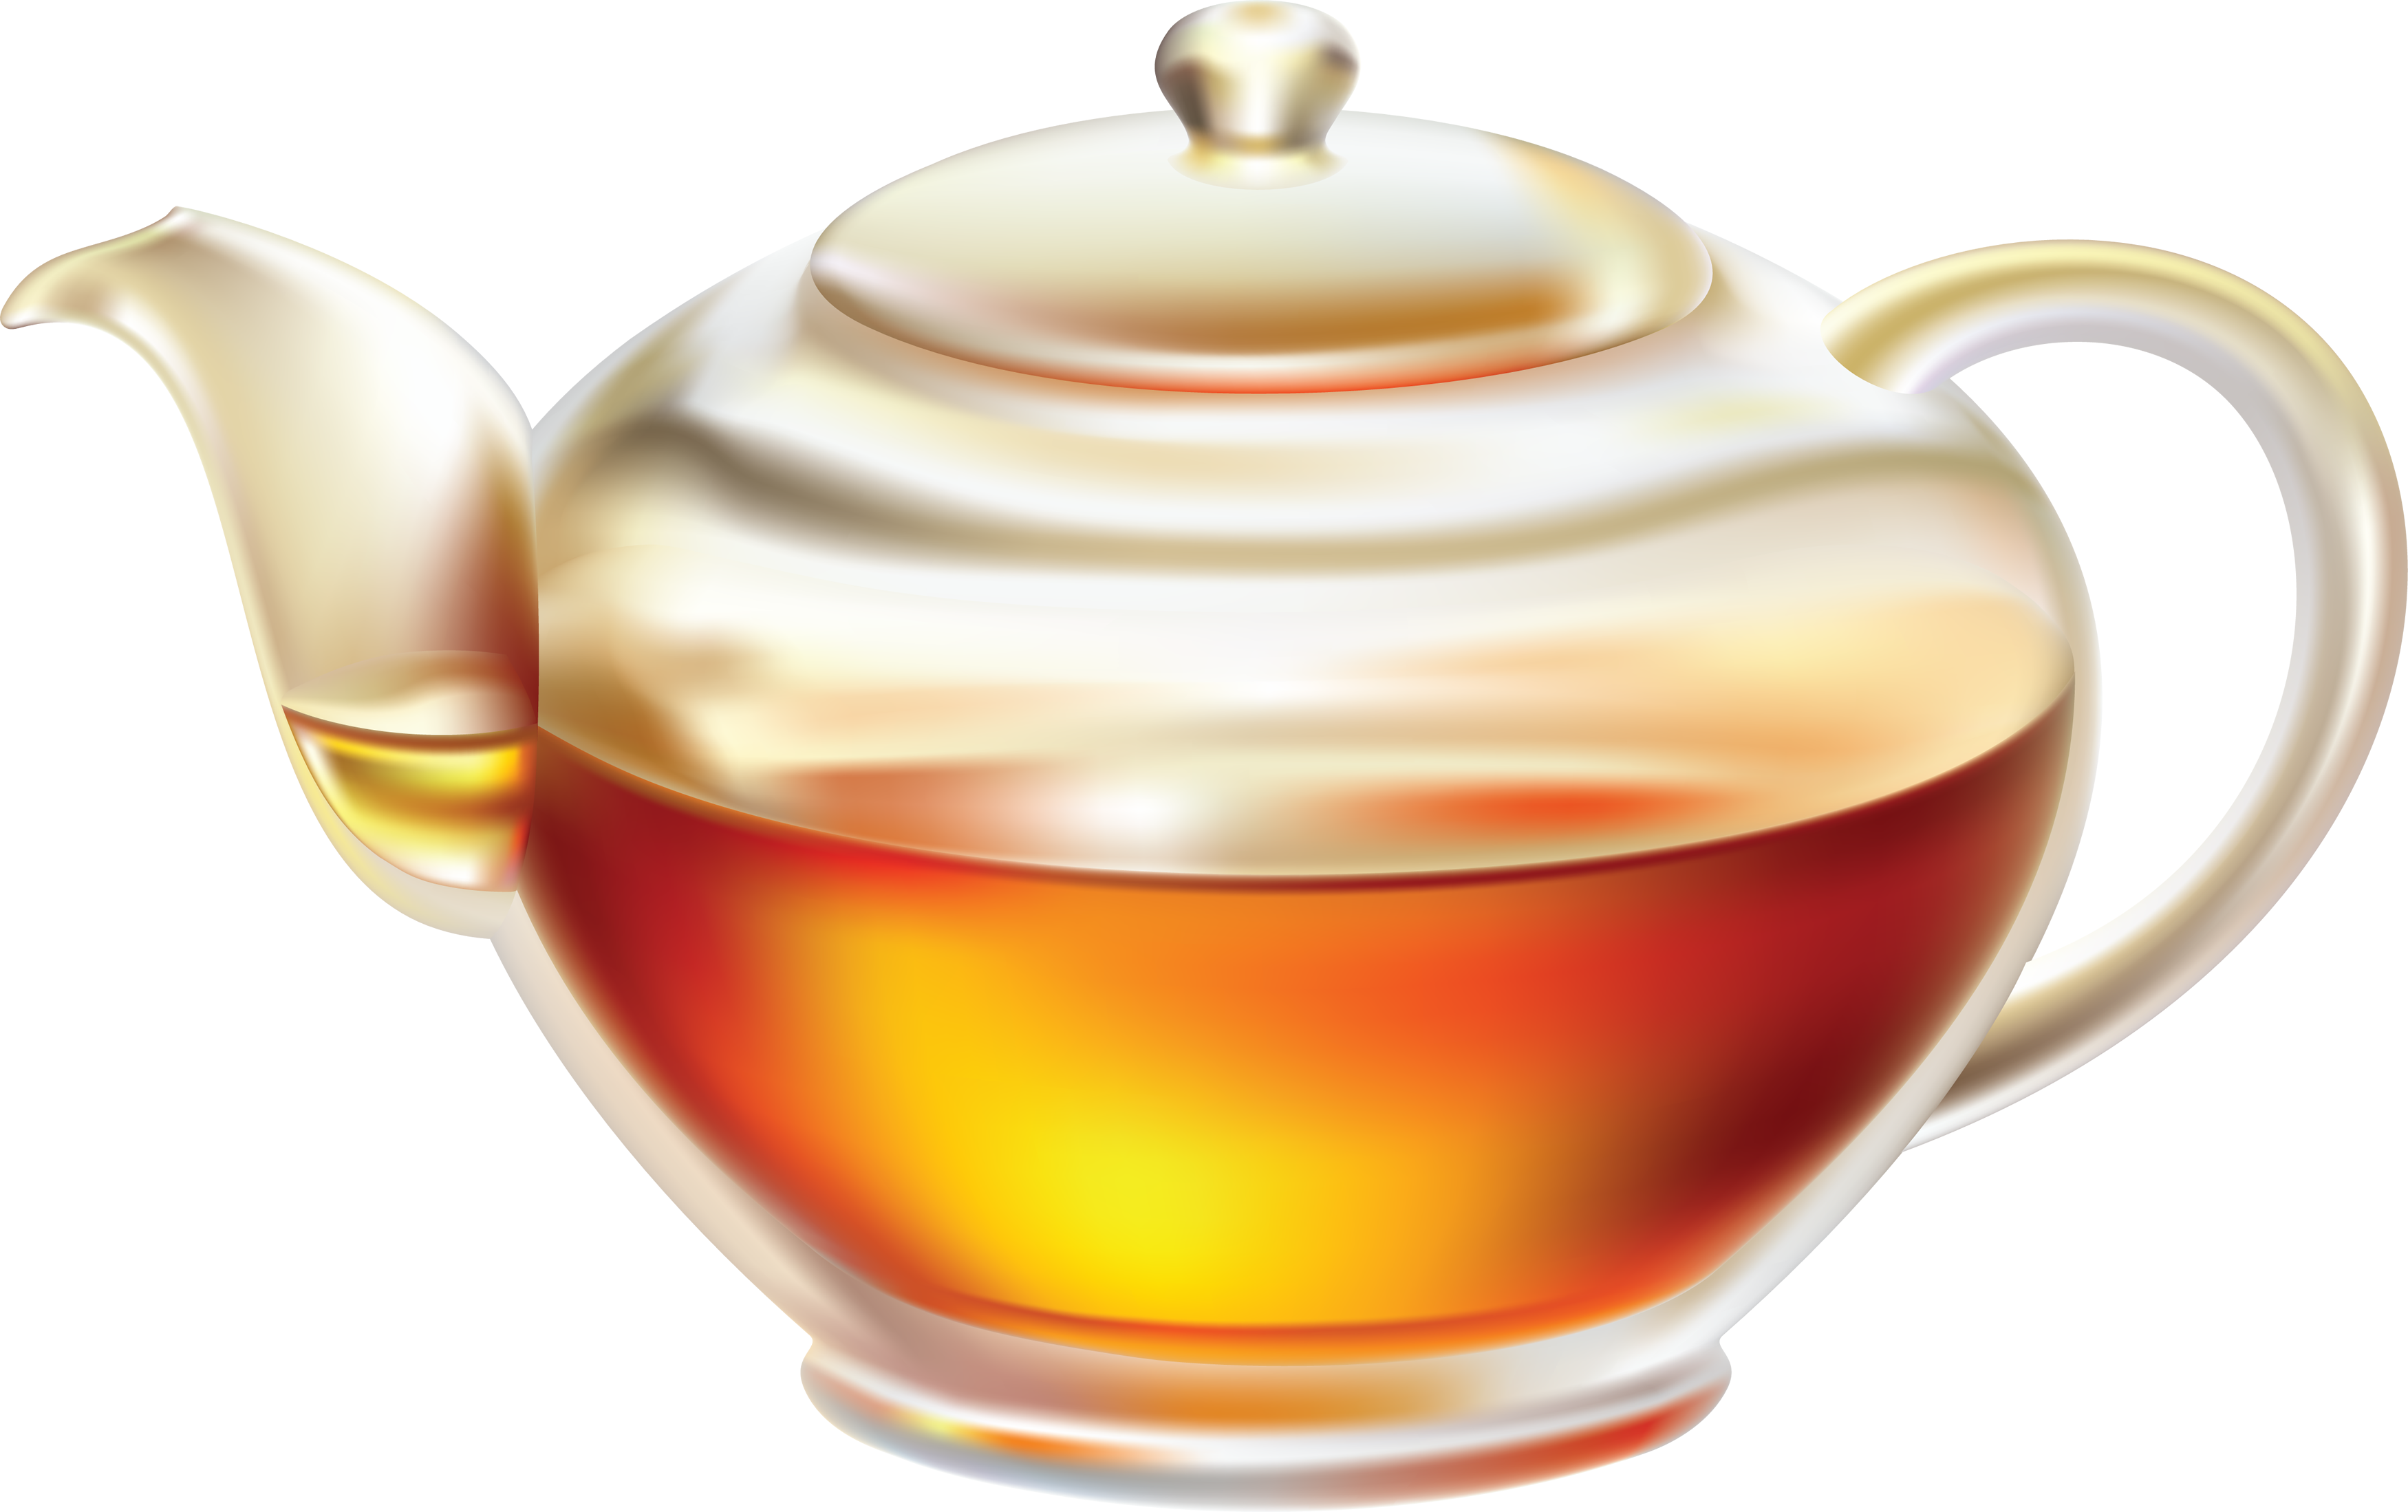 Tea Set Png Transparent Images - Tea Kettle Png (3500x2198)